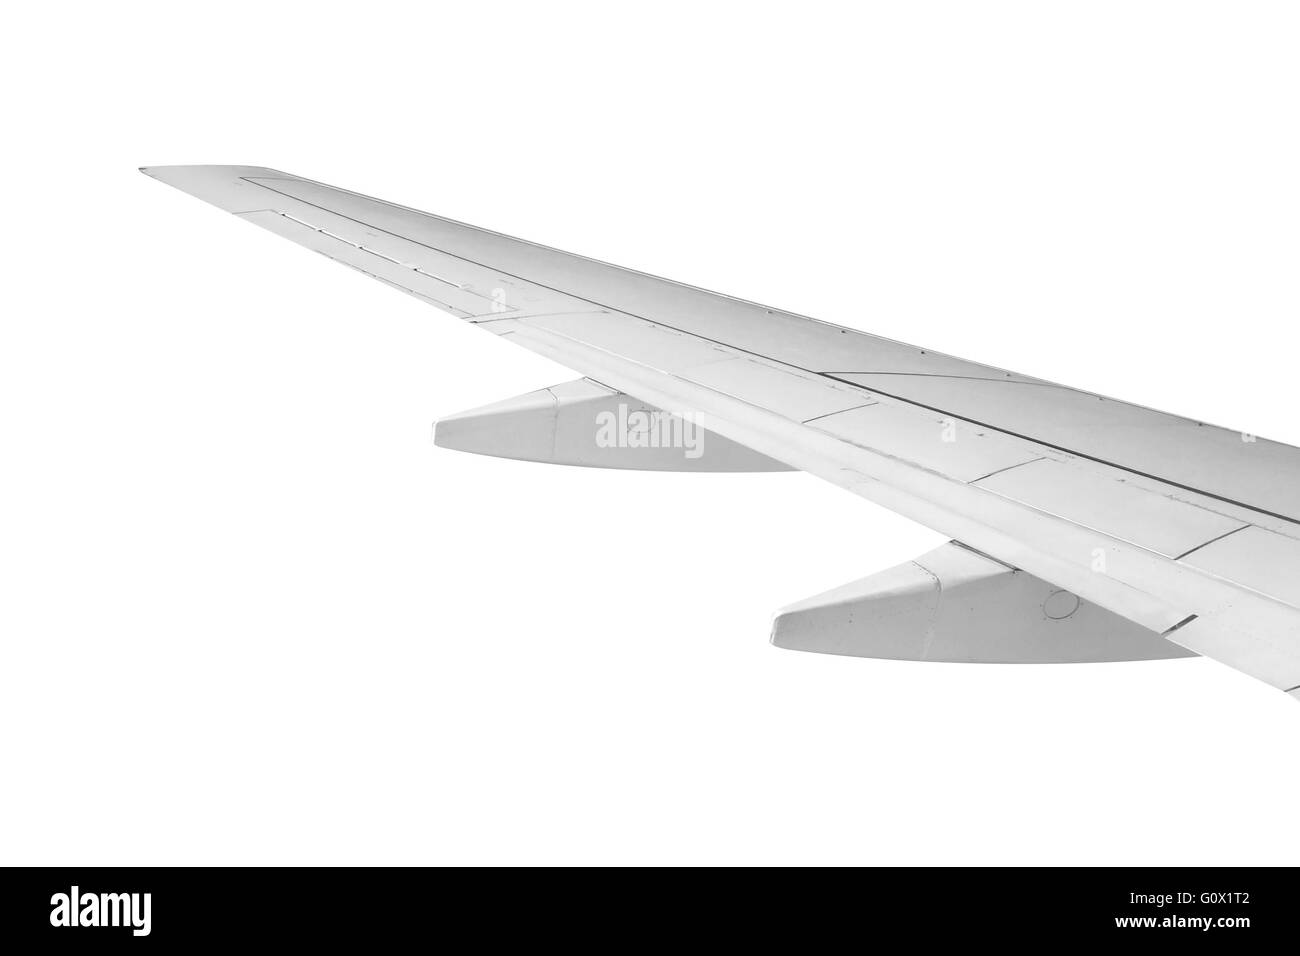 Airplane wing on white Stock Photo